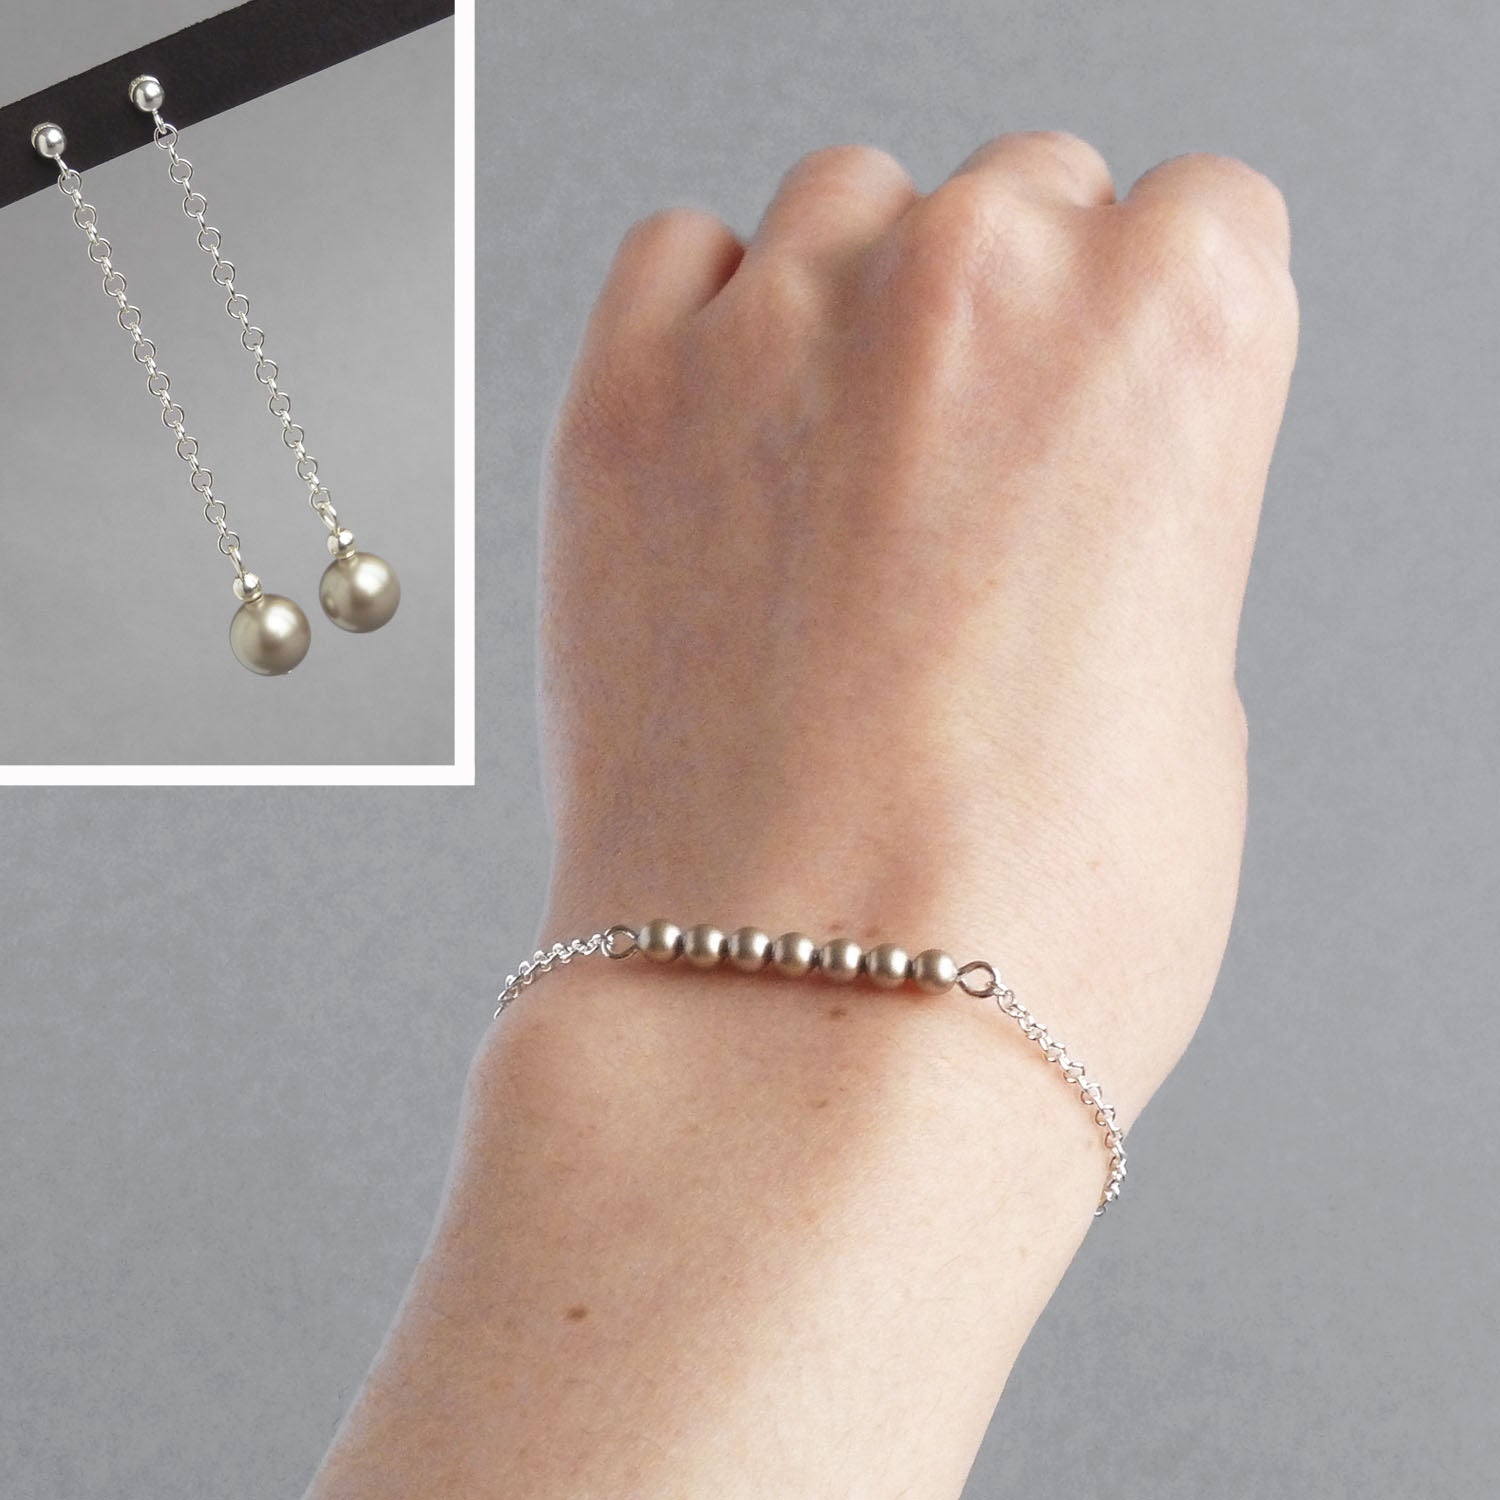 Champagne pearl bracelet and earrings set